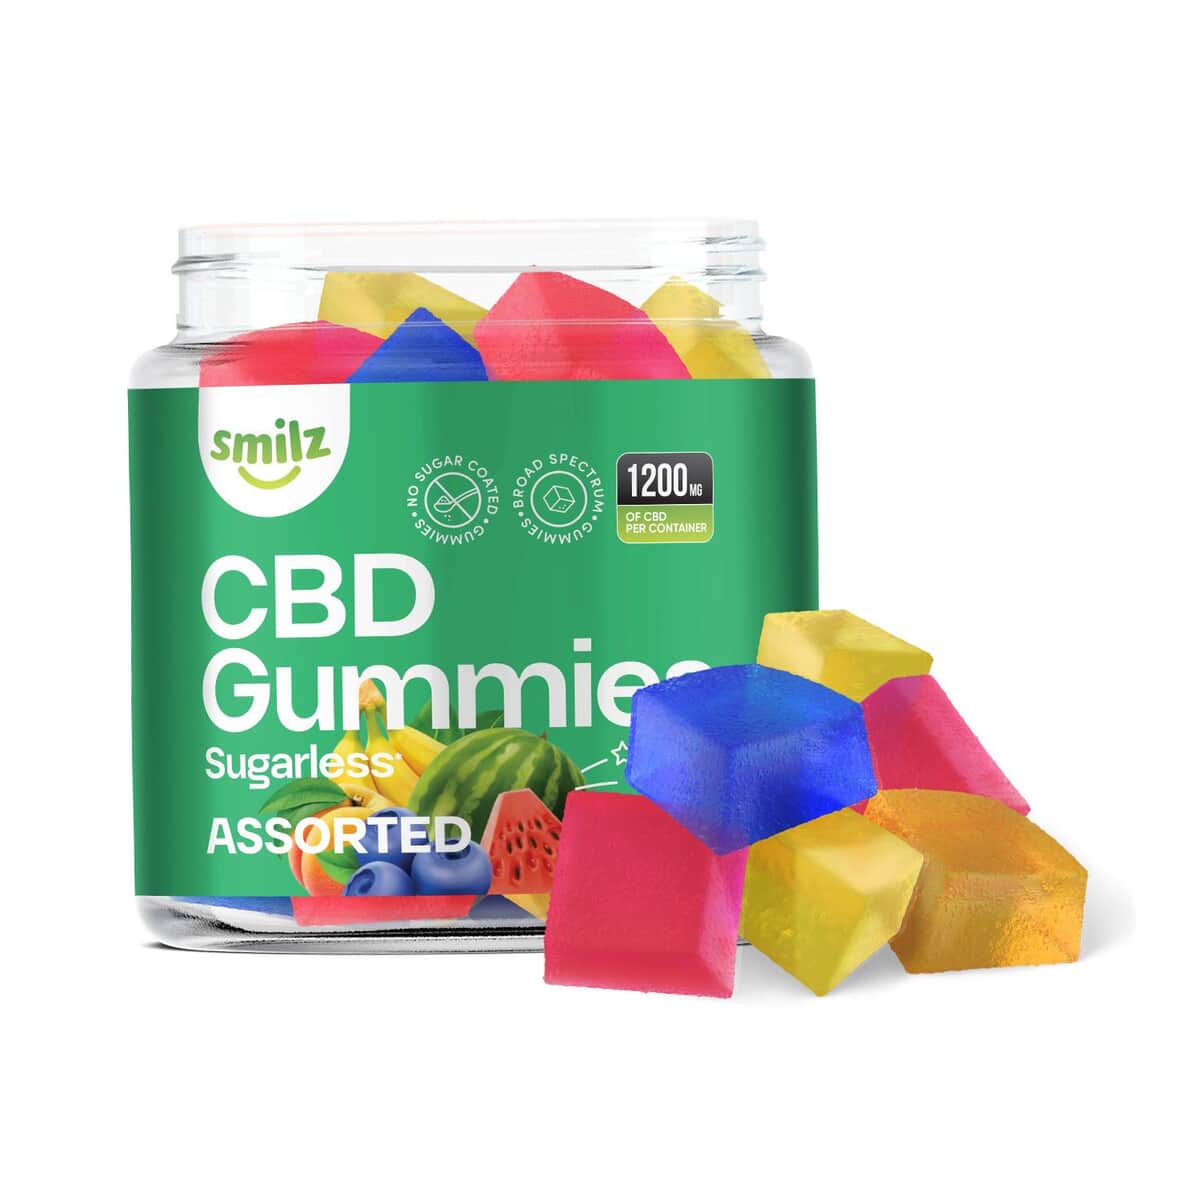 Smilz Assorted Flavors Pectin-infused Broad Spectrum Sugar-free CBD Gummies - 1200mg image number 0